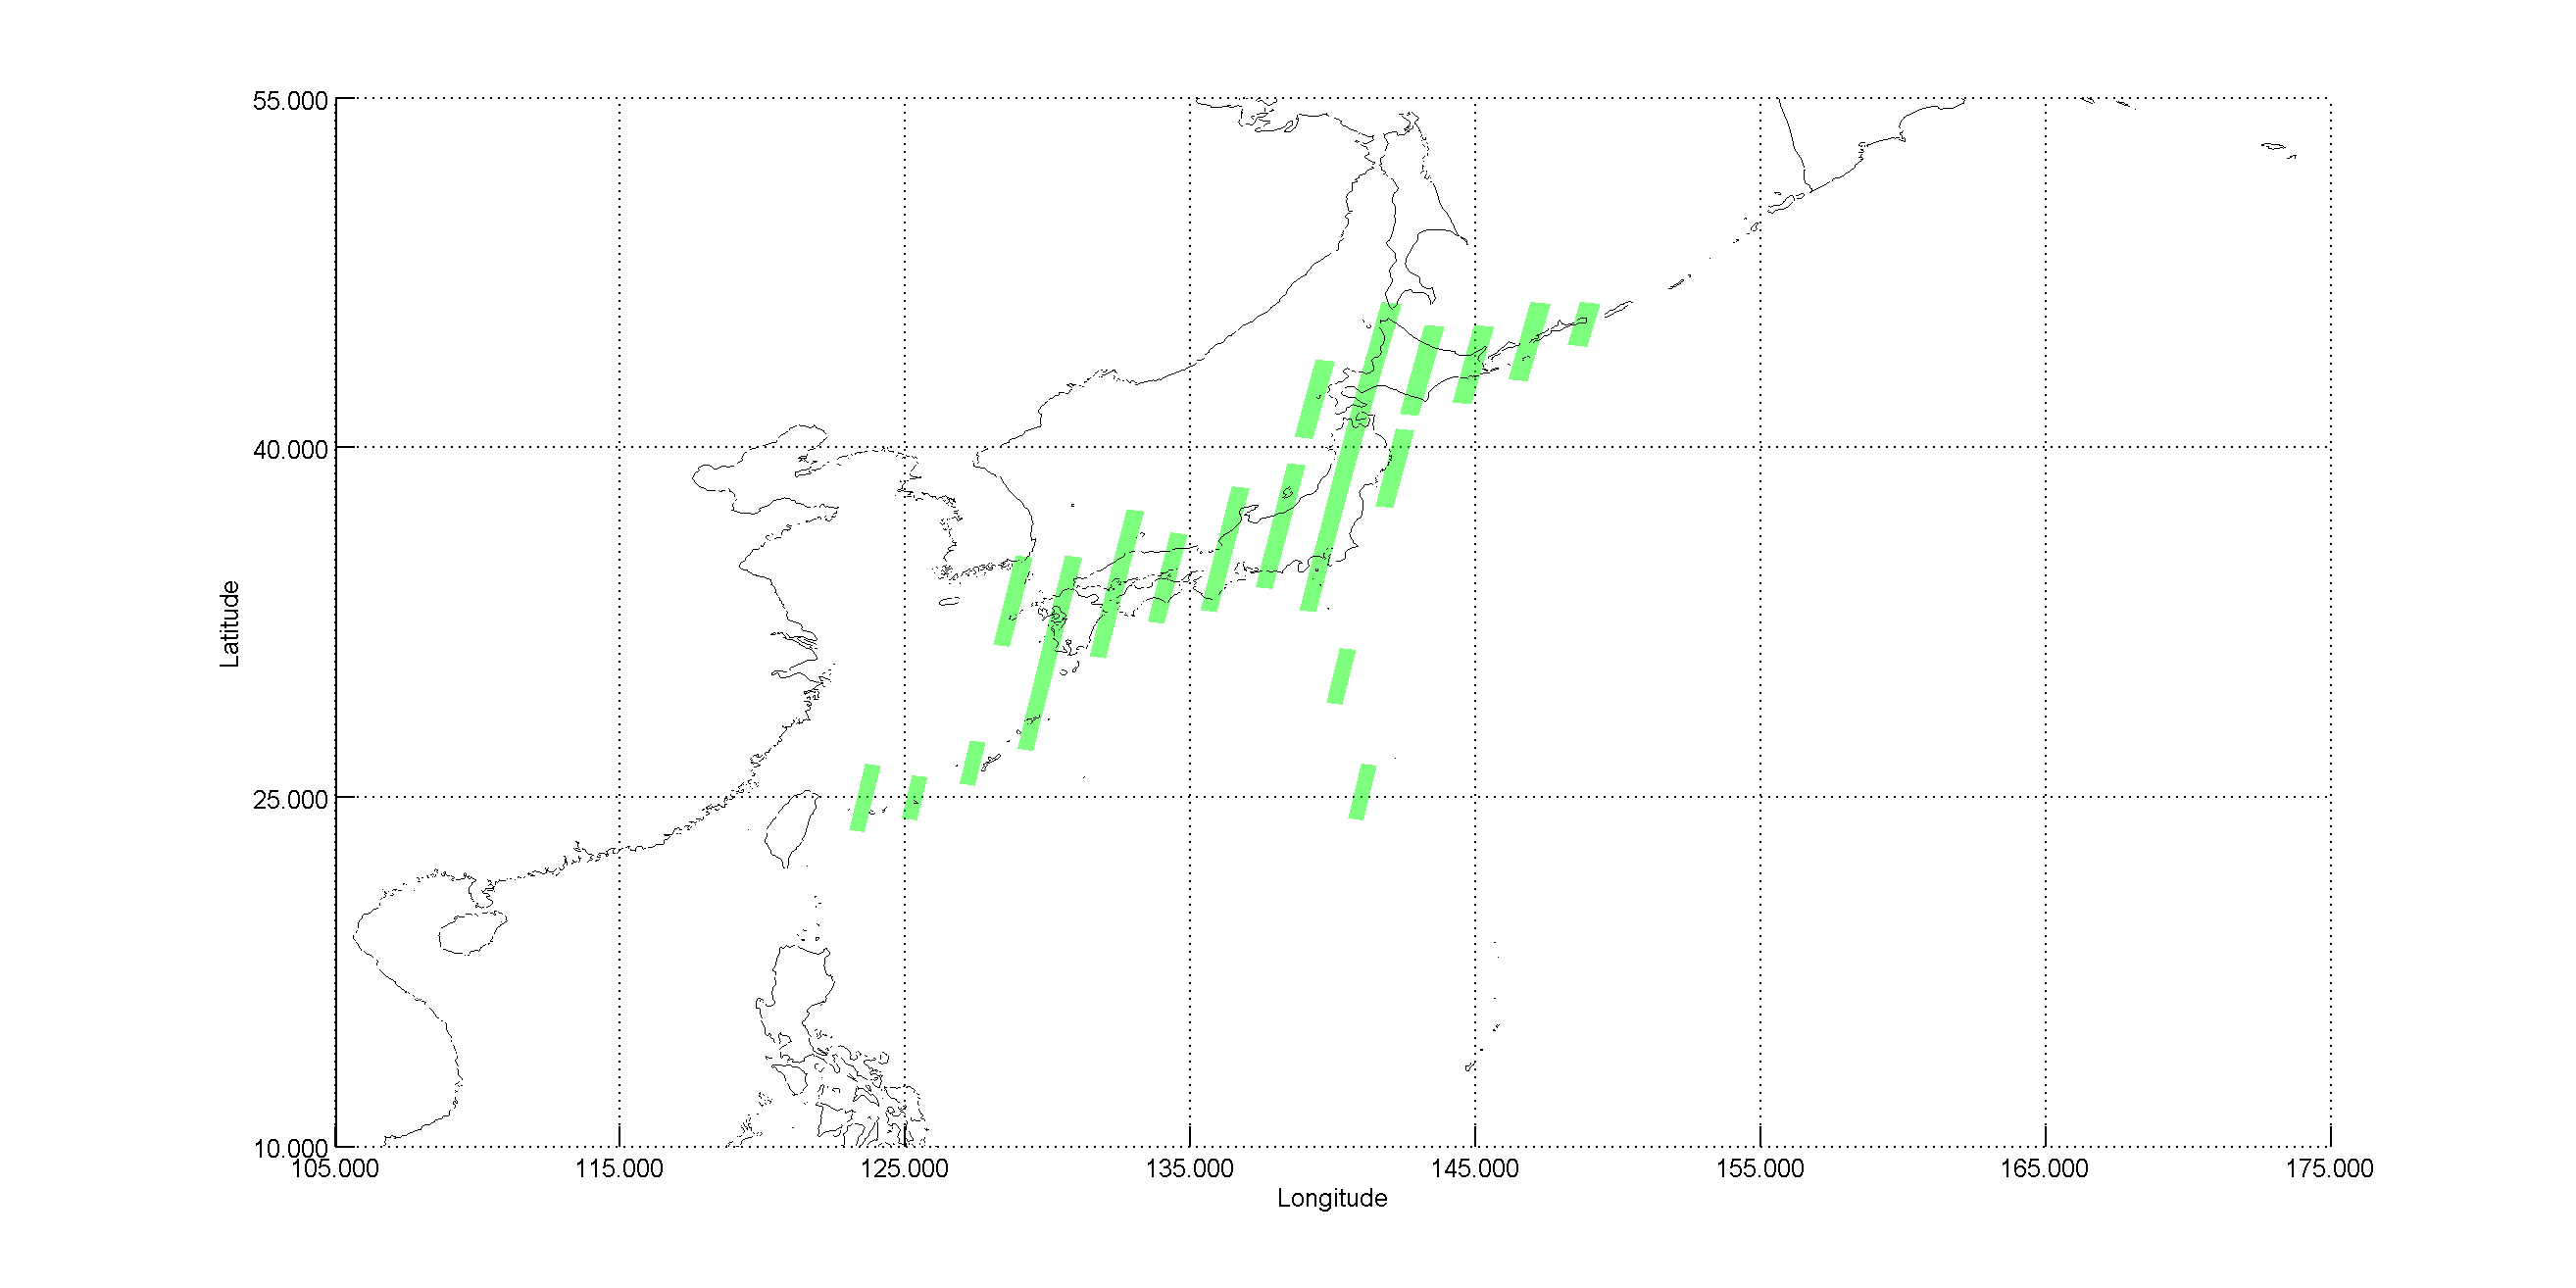 CYCLE_174 - Japan Descending passes